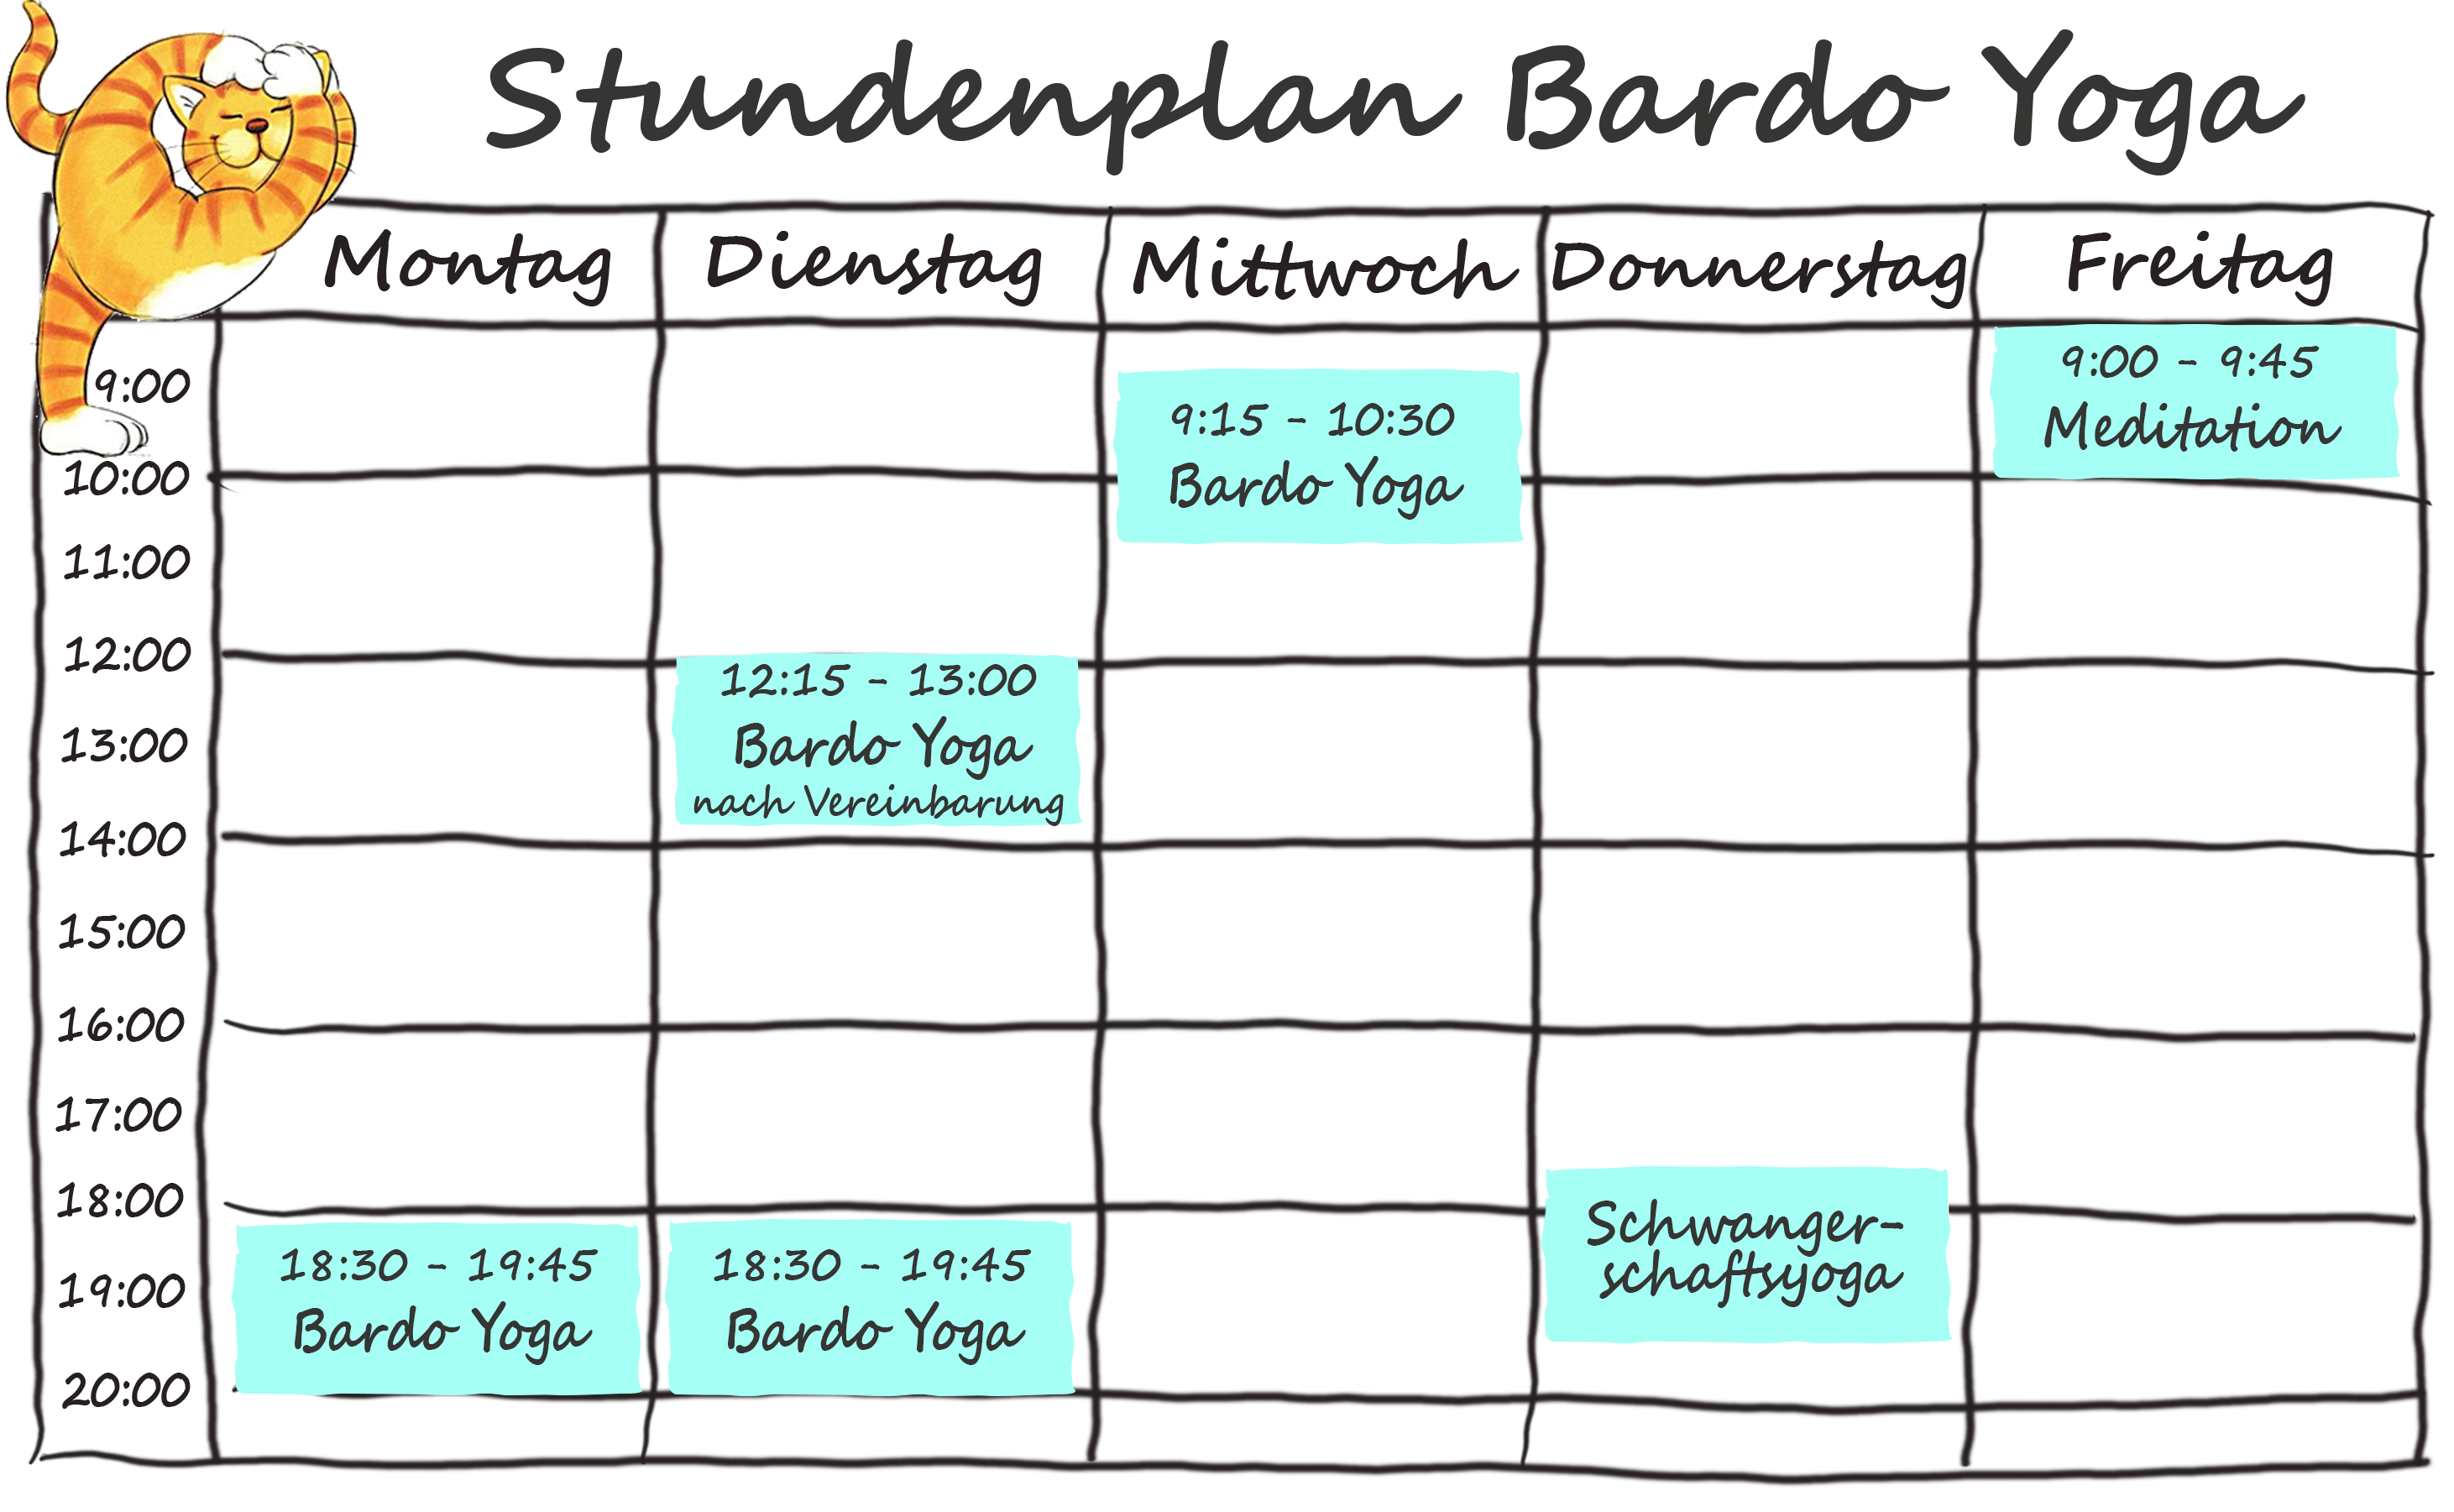 Stundenplan Bardo Yoga